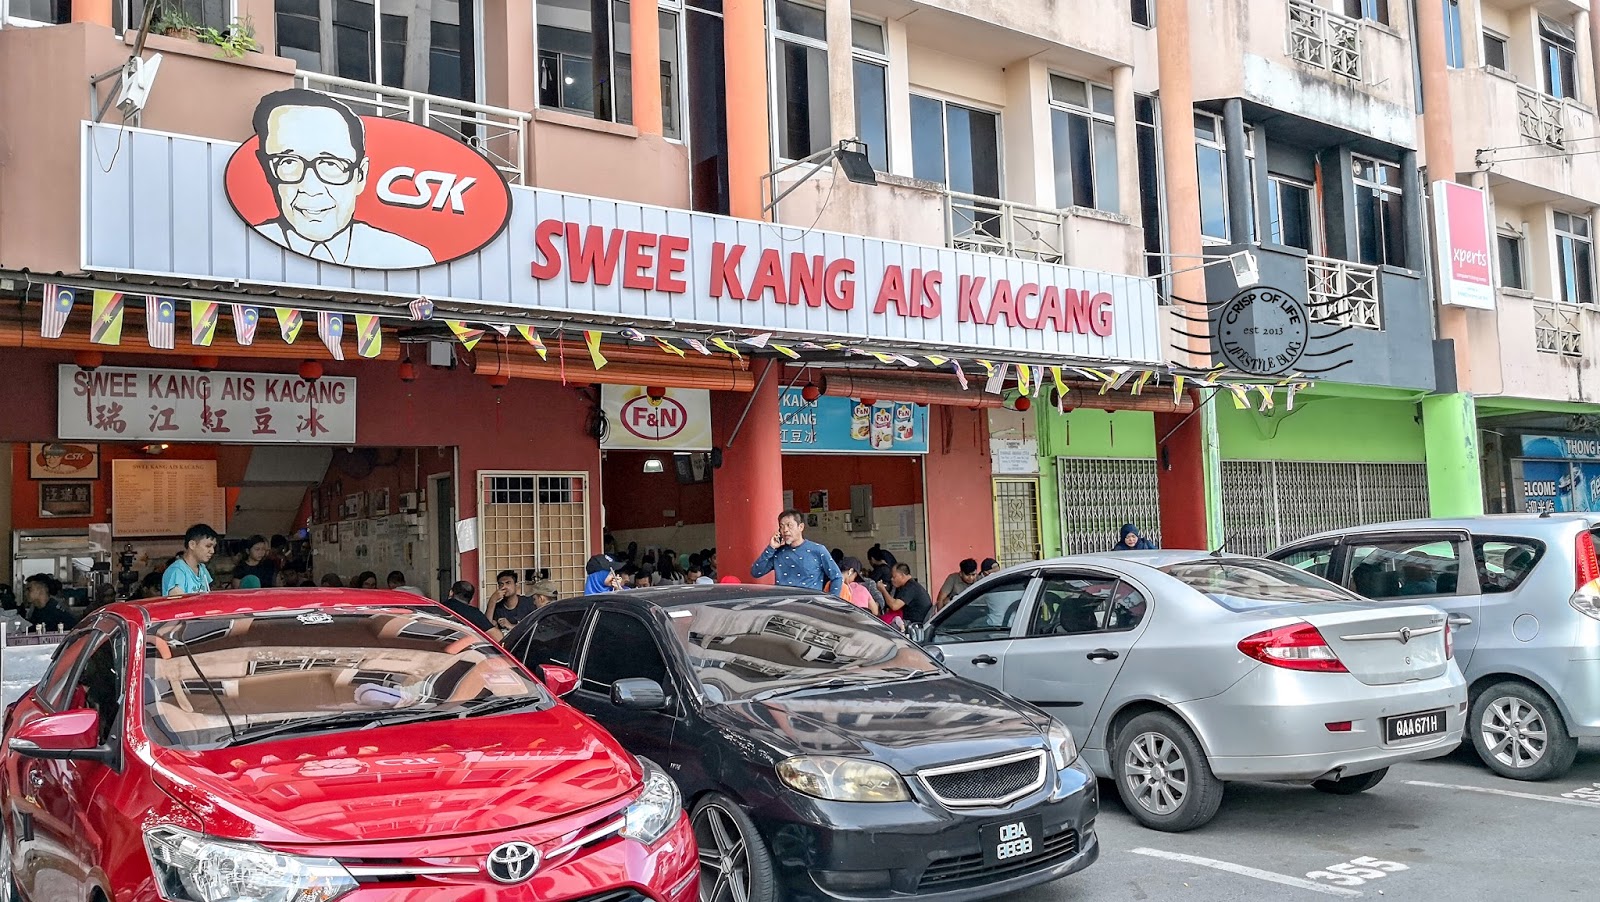 Swee Kang Ice Kacang @ Jalan Haji Taha, Kuching, Sarawak